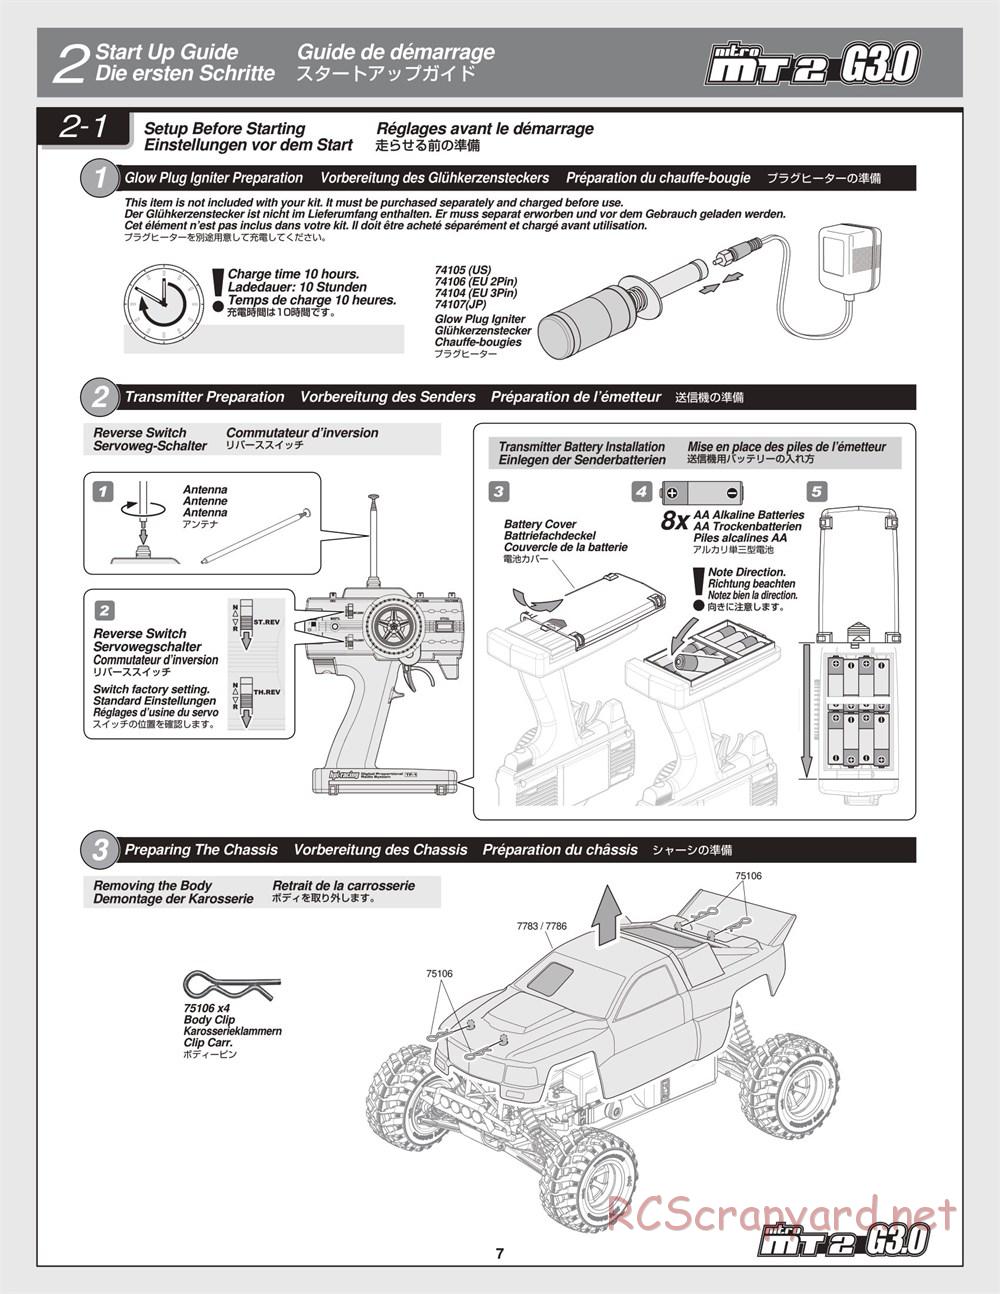 HPI - Nitro MT2 G3.0 - Manual - Page 7